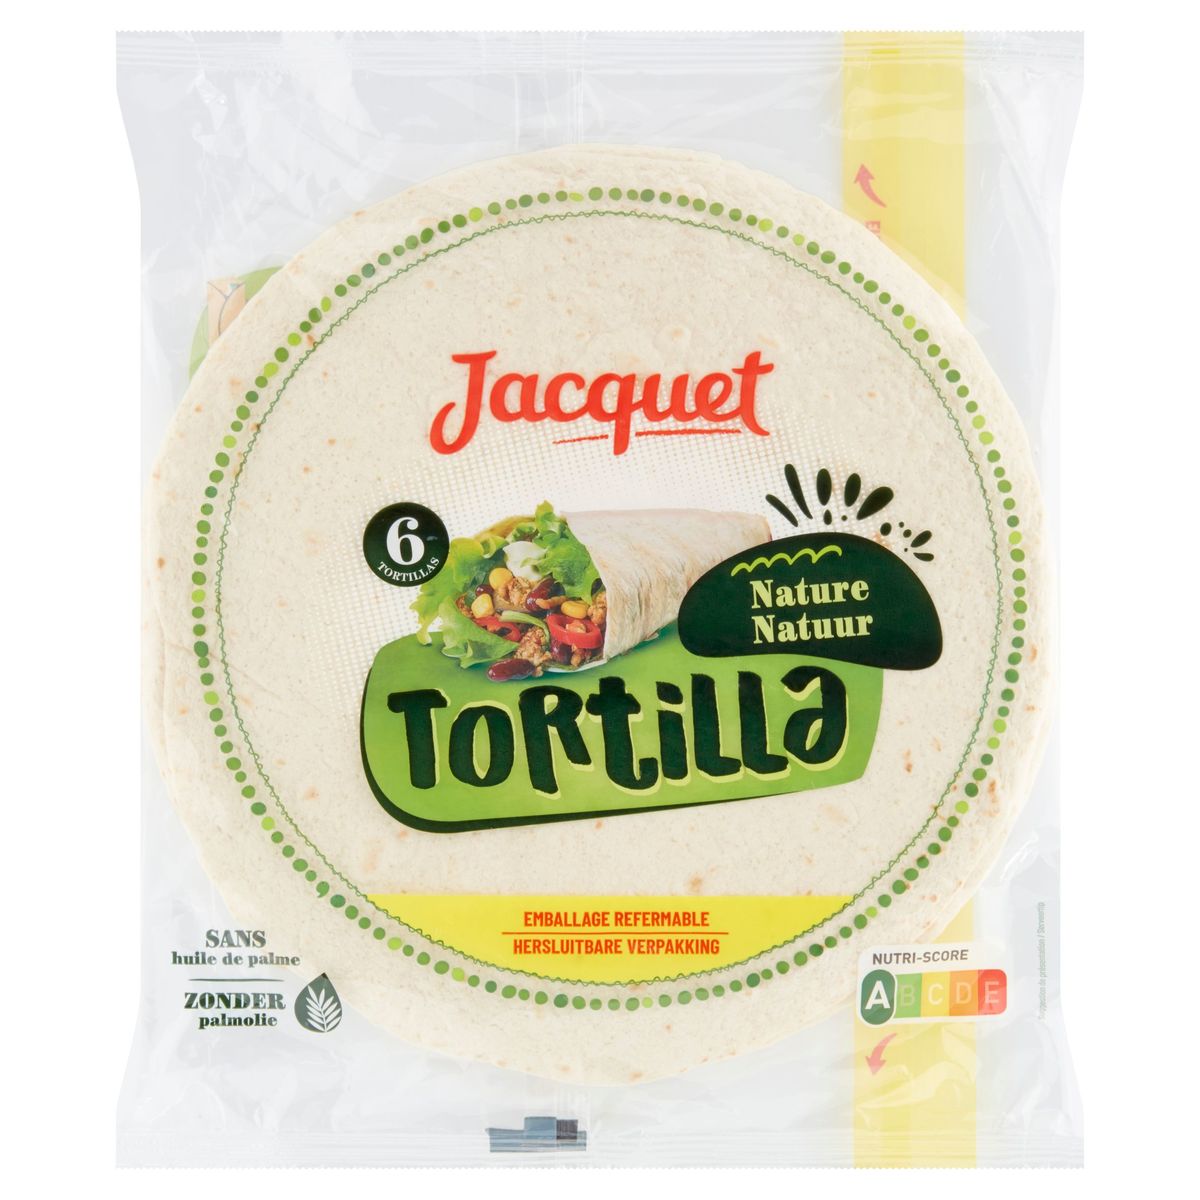 Jacquet Tortilla Nature 6 Stuks 370 g